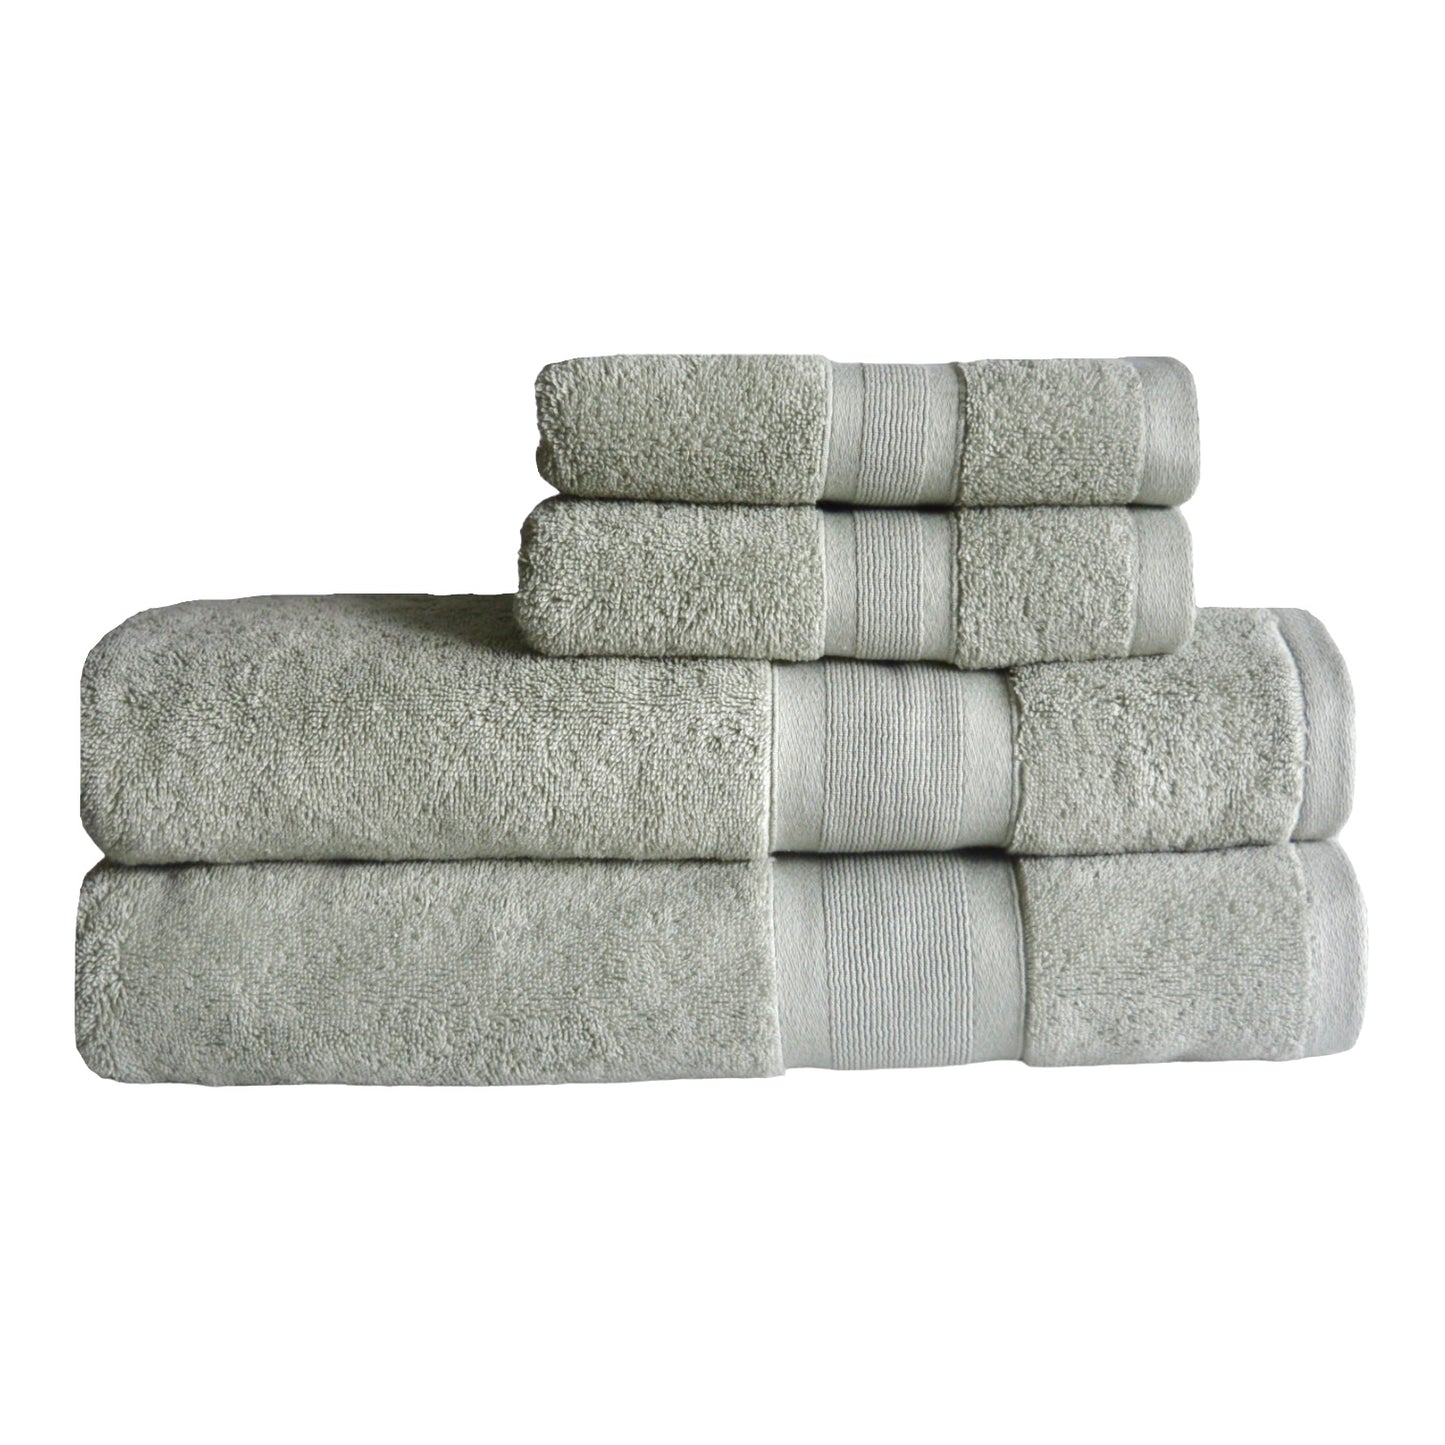 Combed Turkish Cotton Towel Set in Pale Sage color